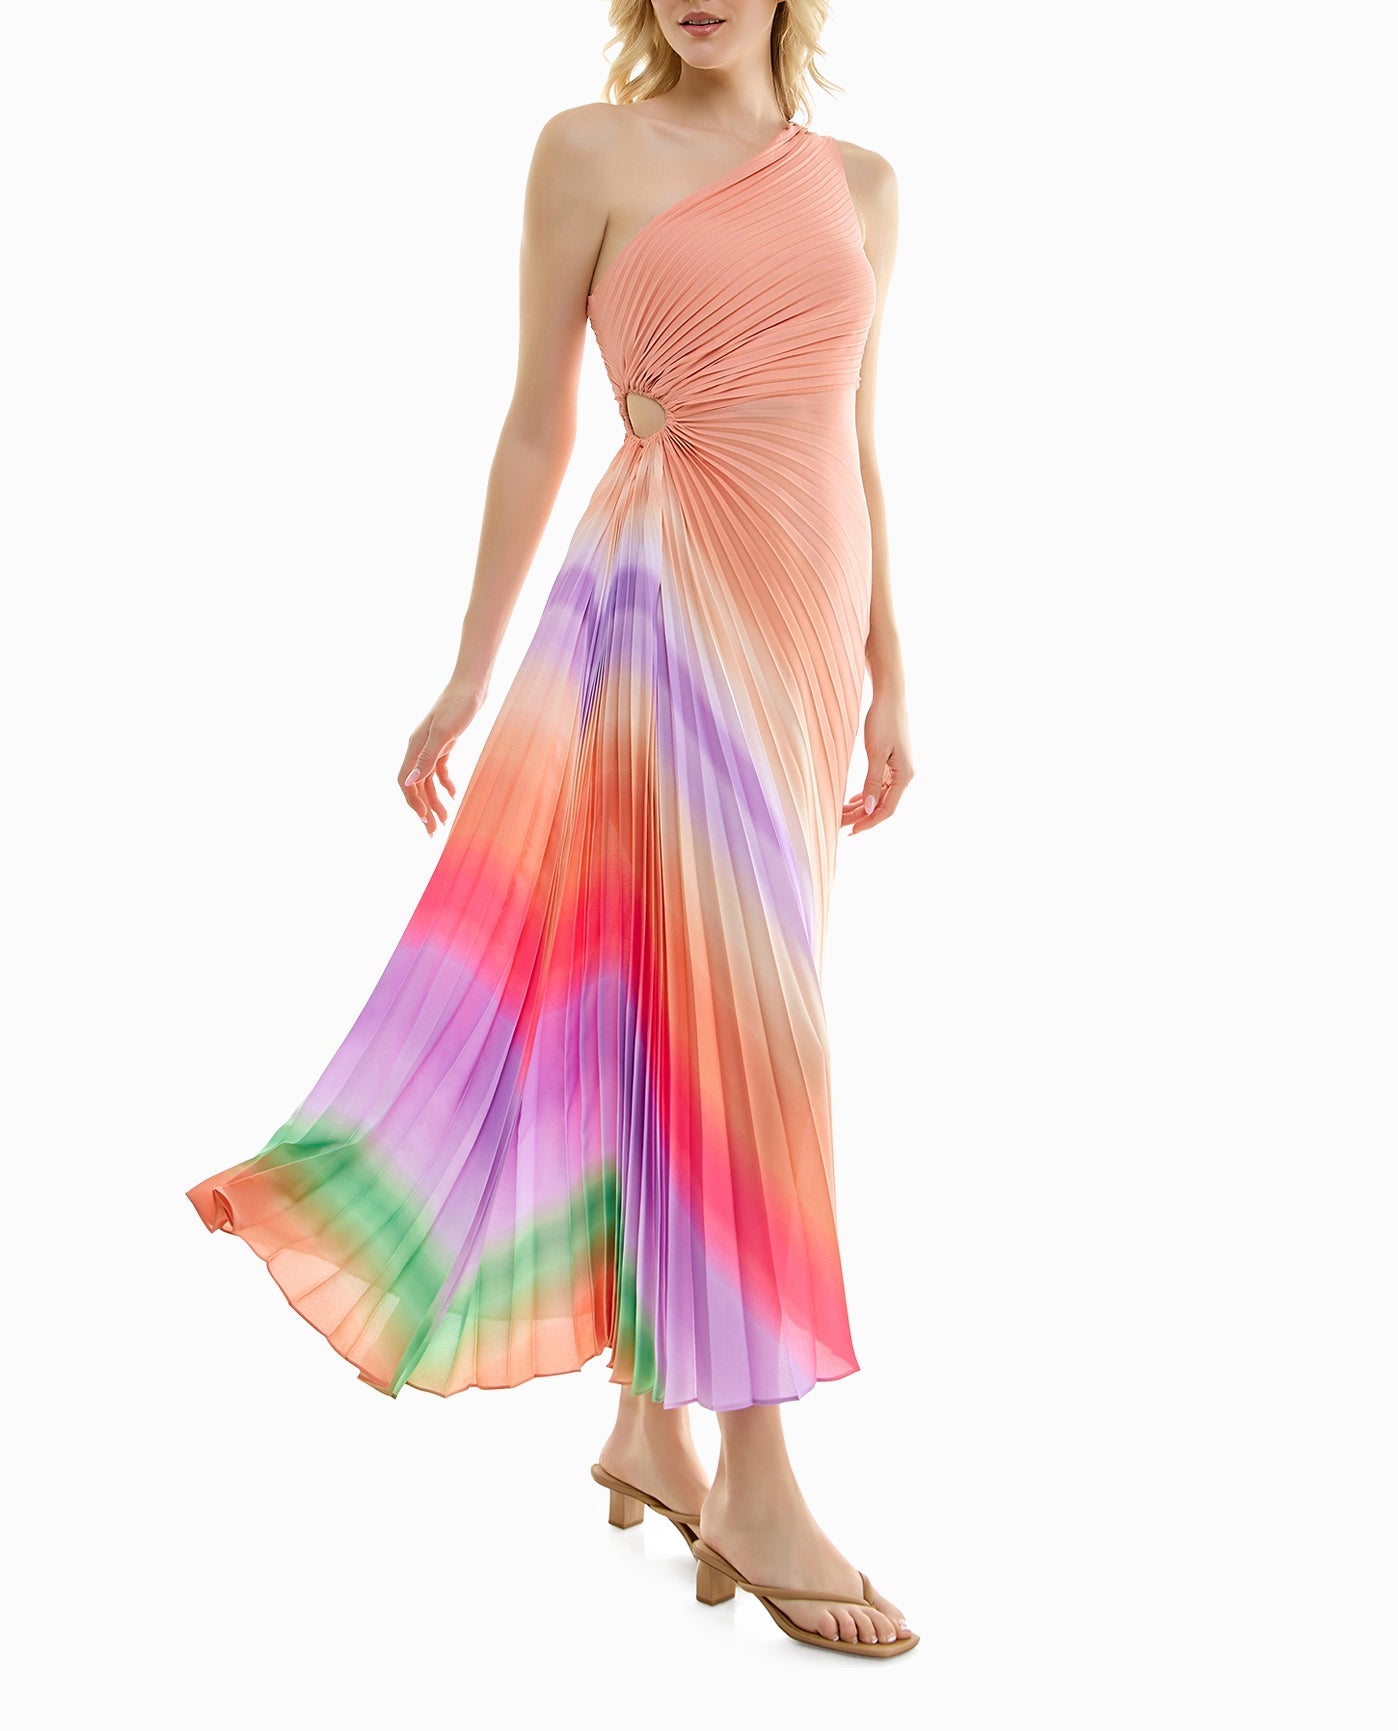 FLOWING DETAIL OF LORA CHIFFON ONE SHOULDER DRESS | Cantaloupe Stripes